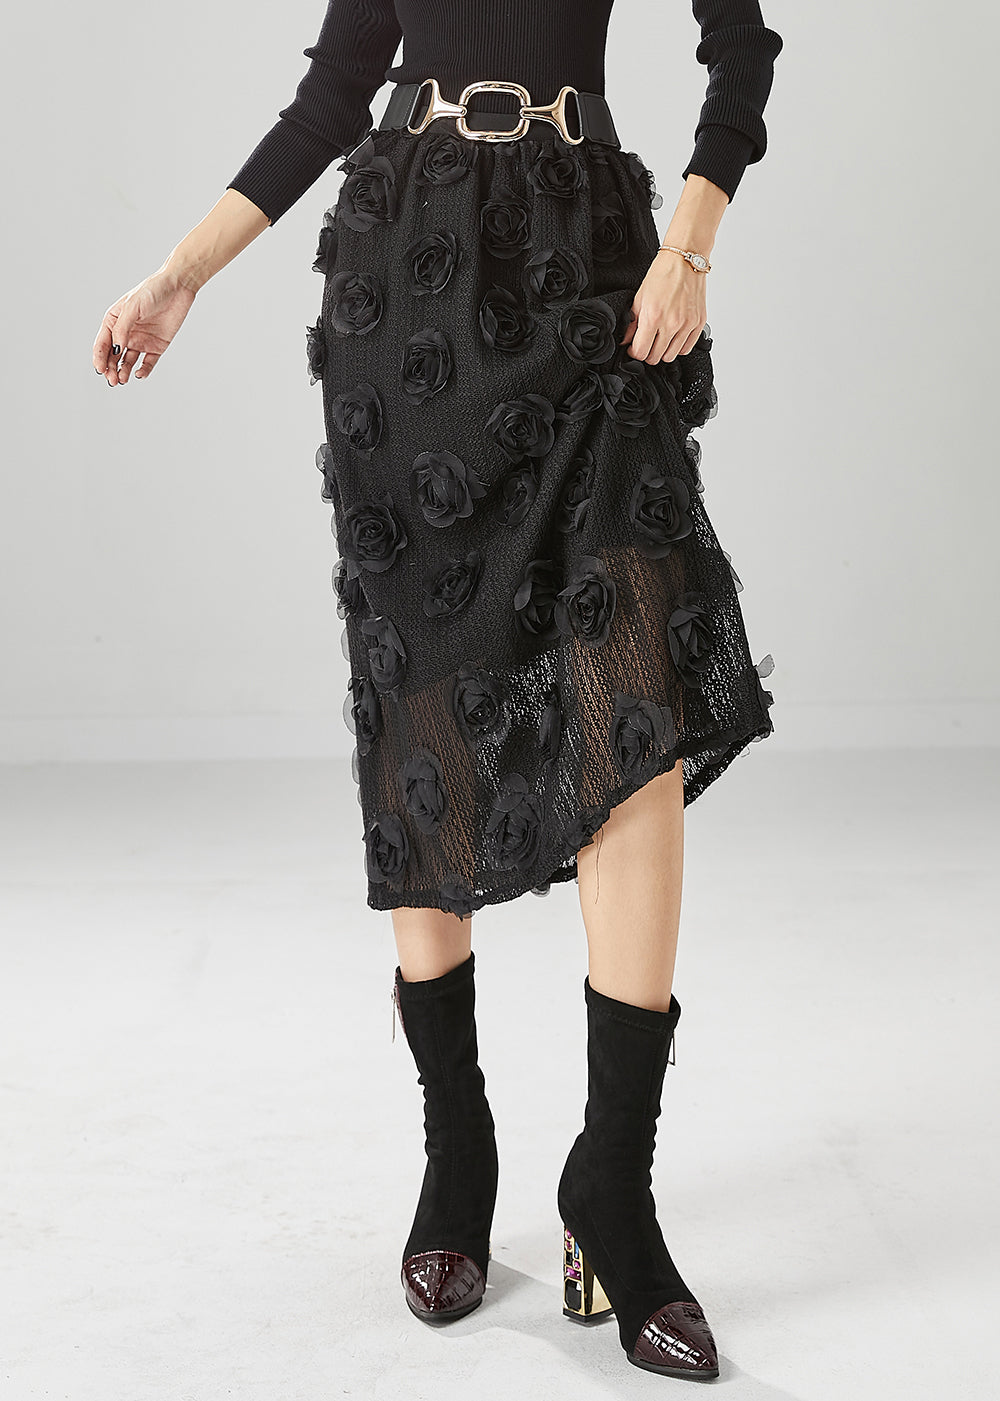 Diy Black High Waist Three-dimensional Floral Knit Skirt Fall